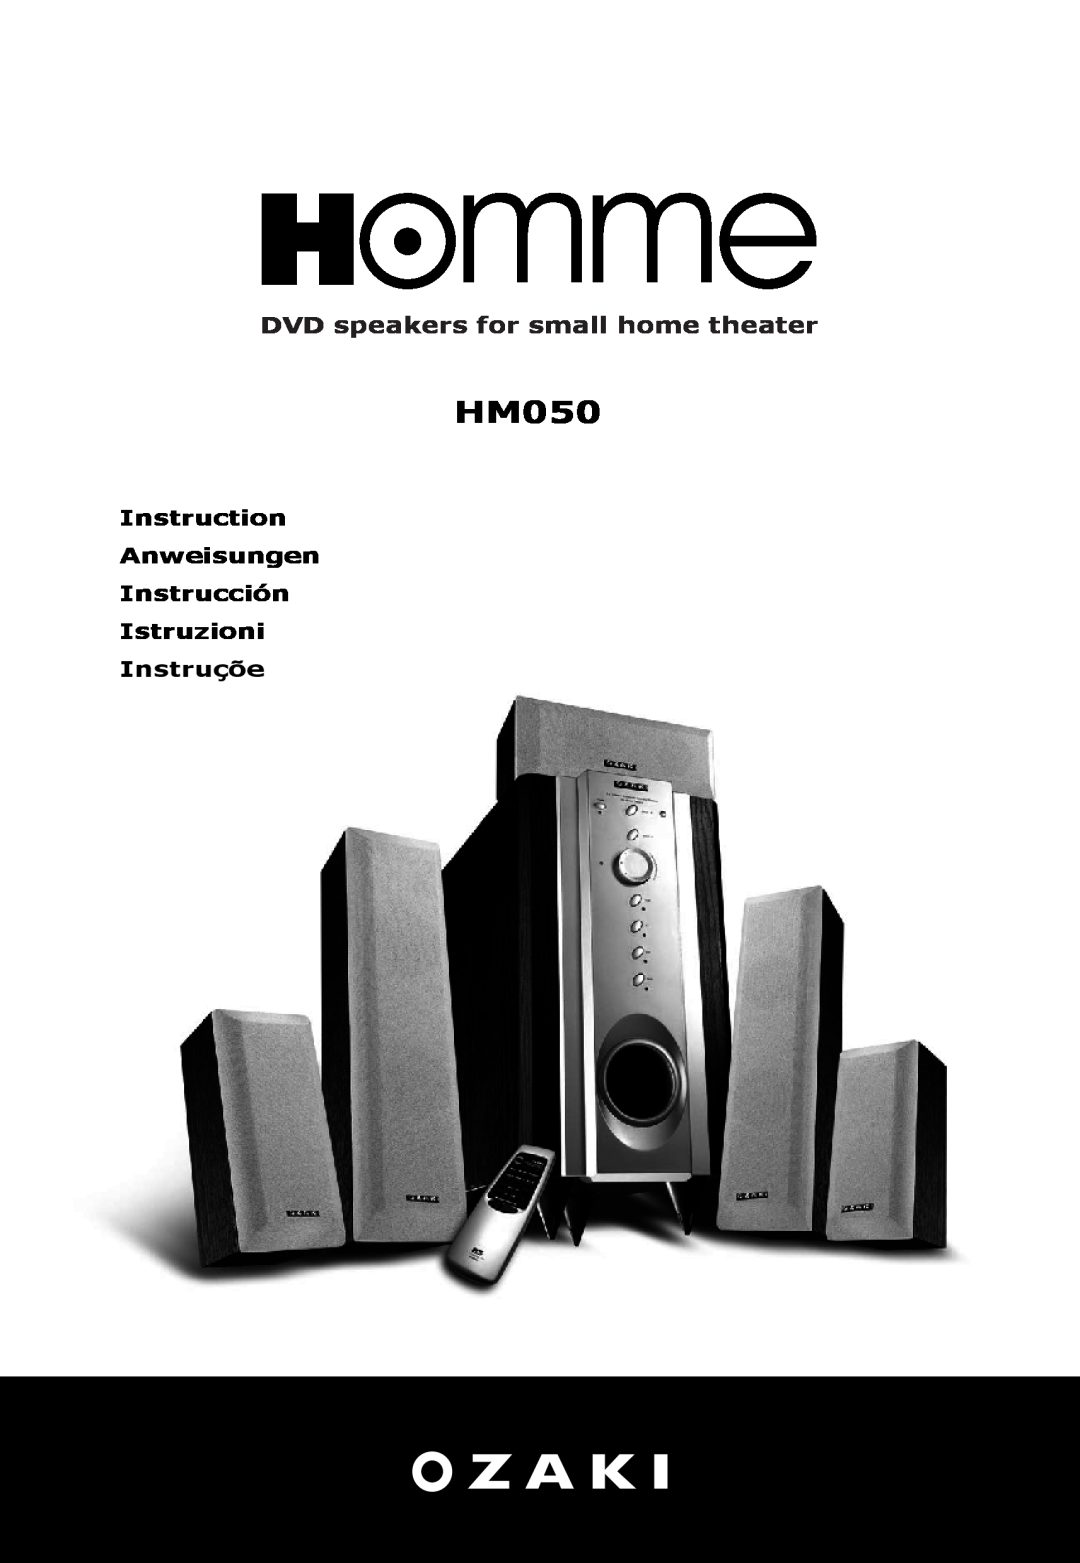 Ozaki Worldwide HM050 manual DVD speakers for small home theater, Instruction Anweisungen Instrucción Istruzioni 